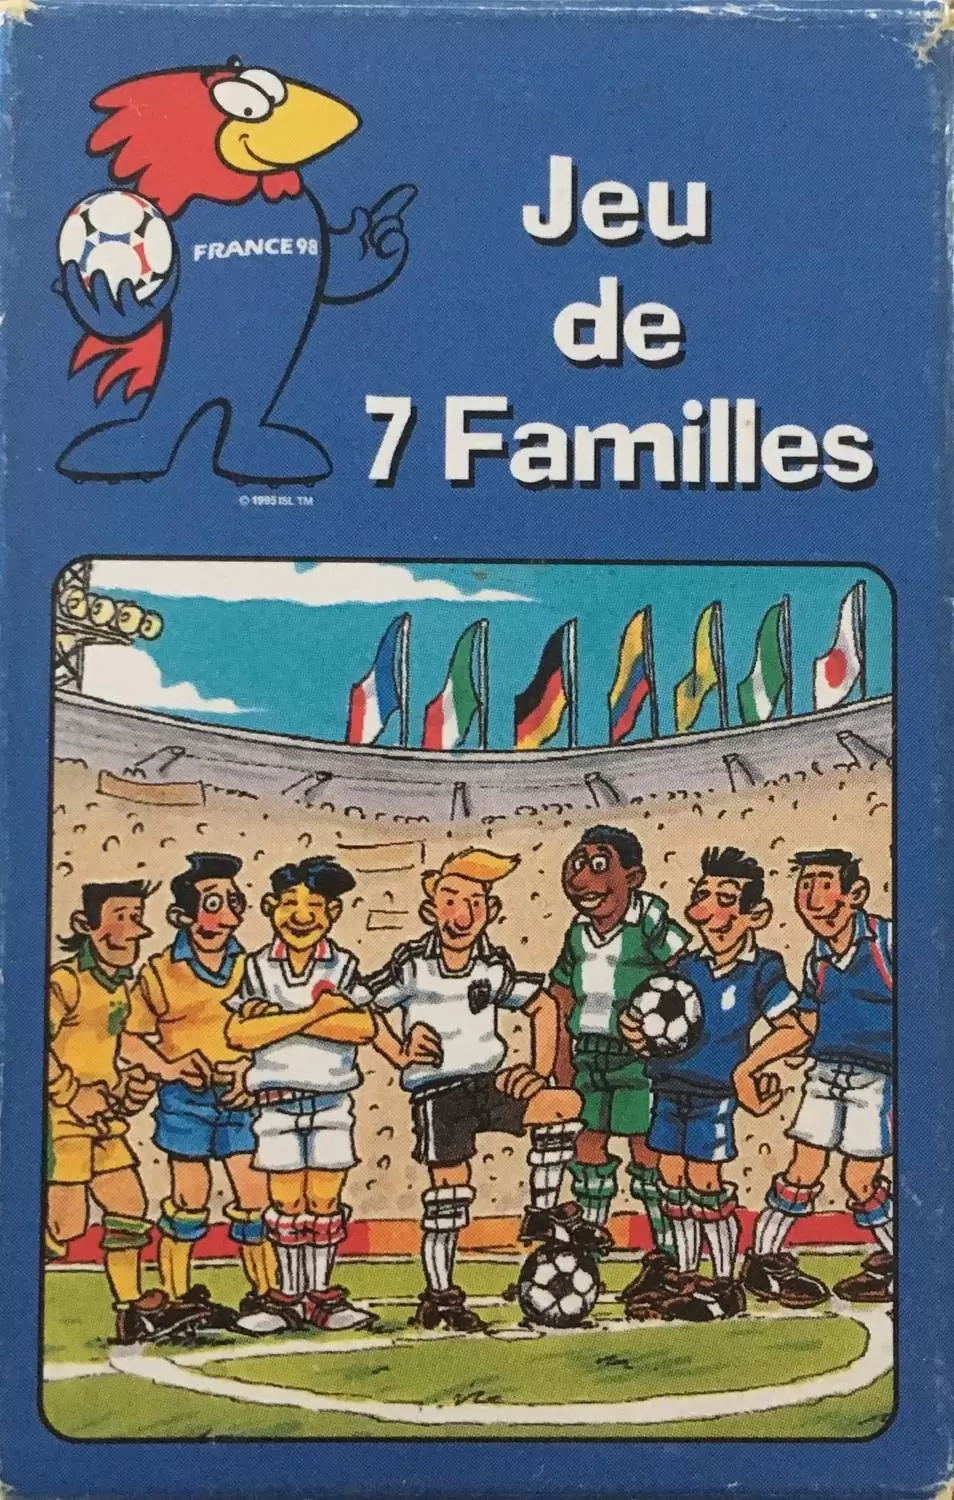 Jeu des 7 Familles - France 98